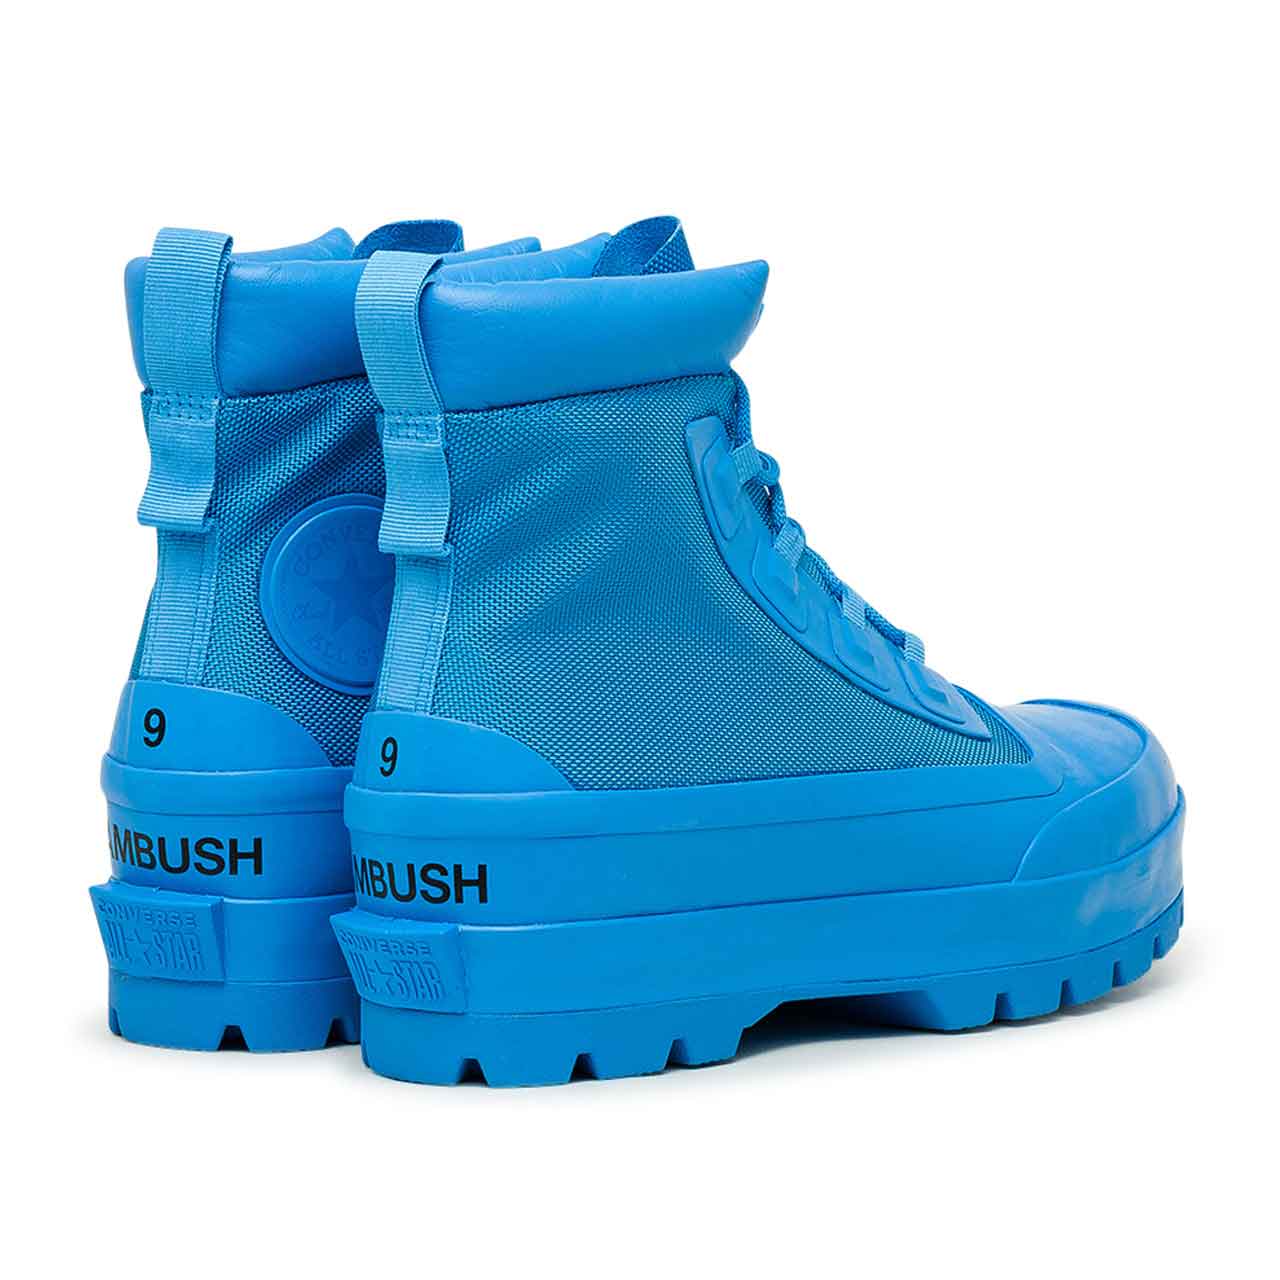 converse ambush x converse ctas duck boot (blue)